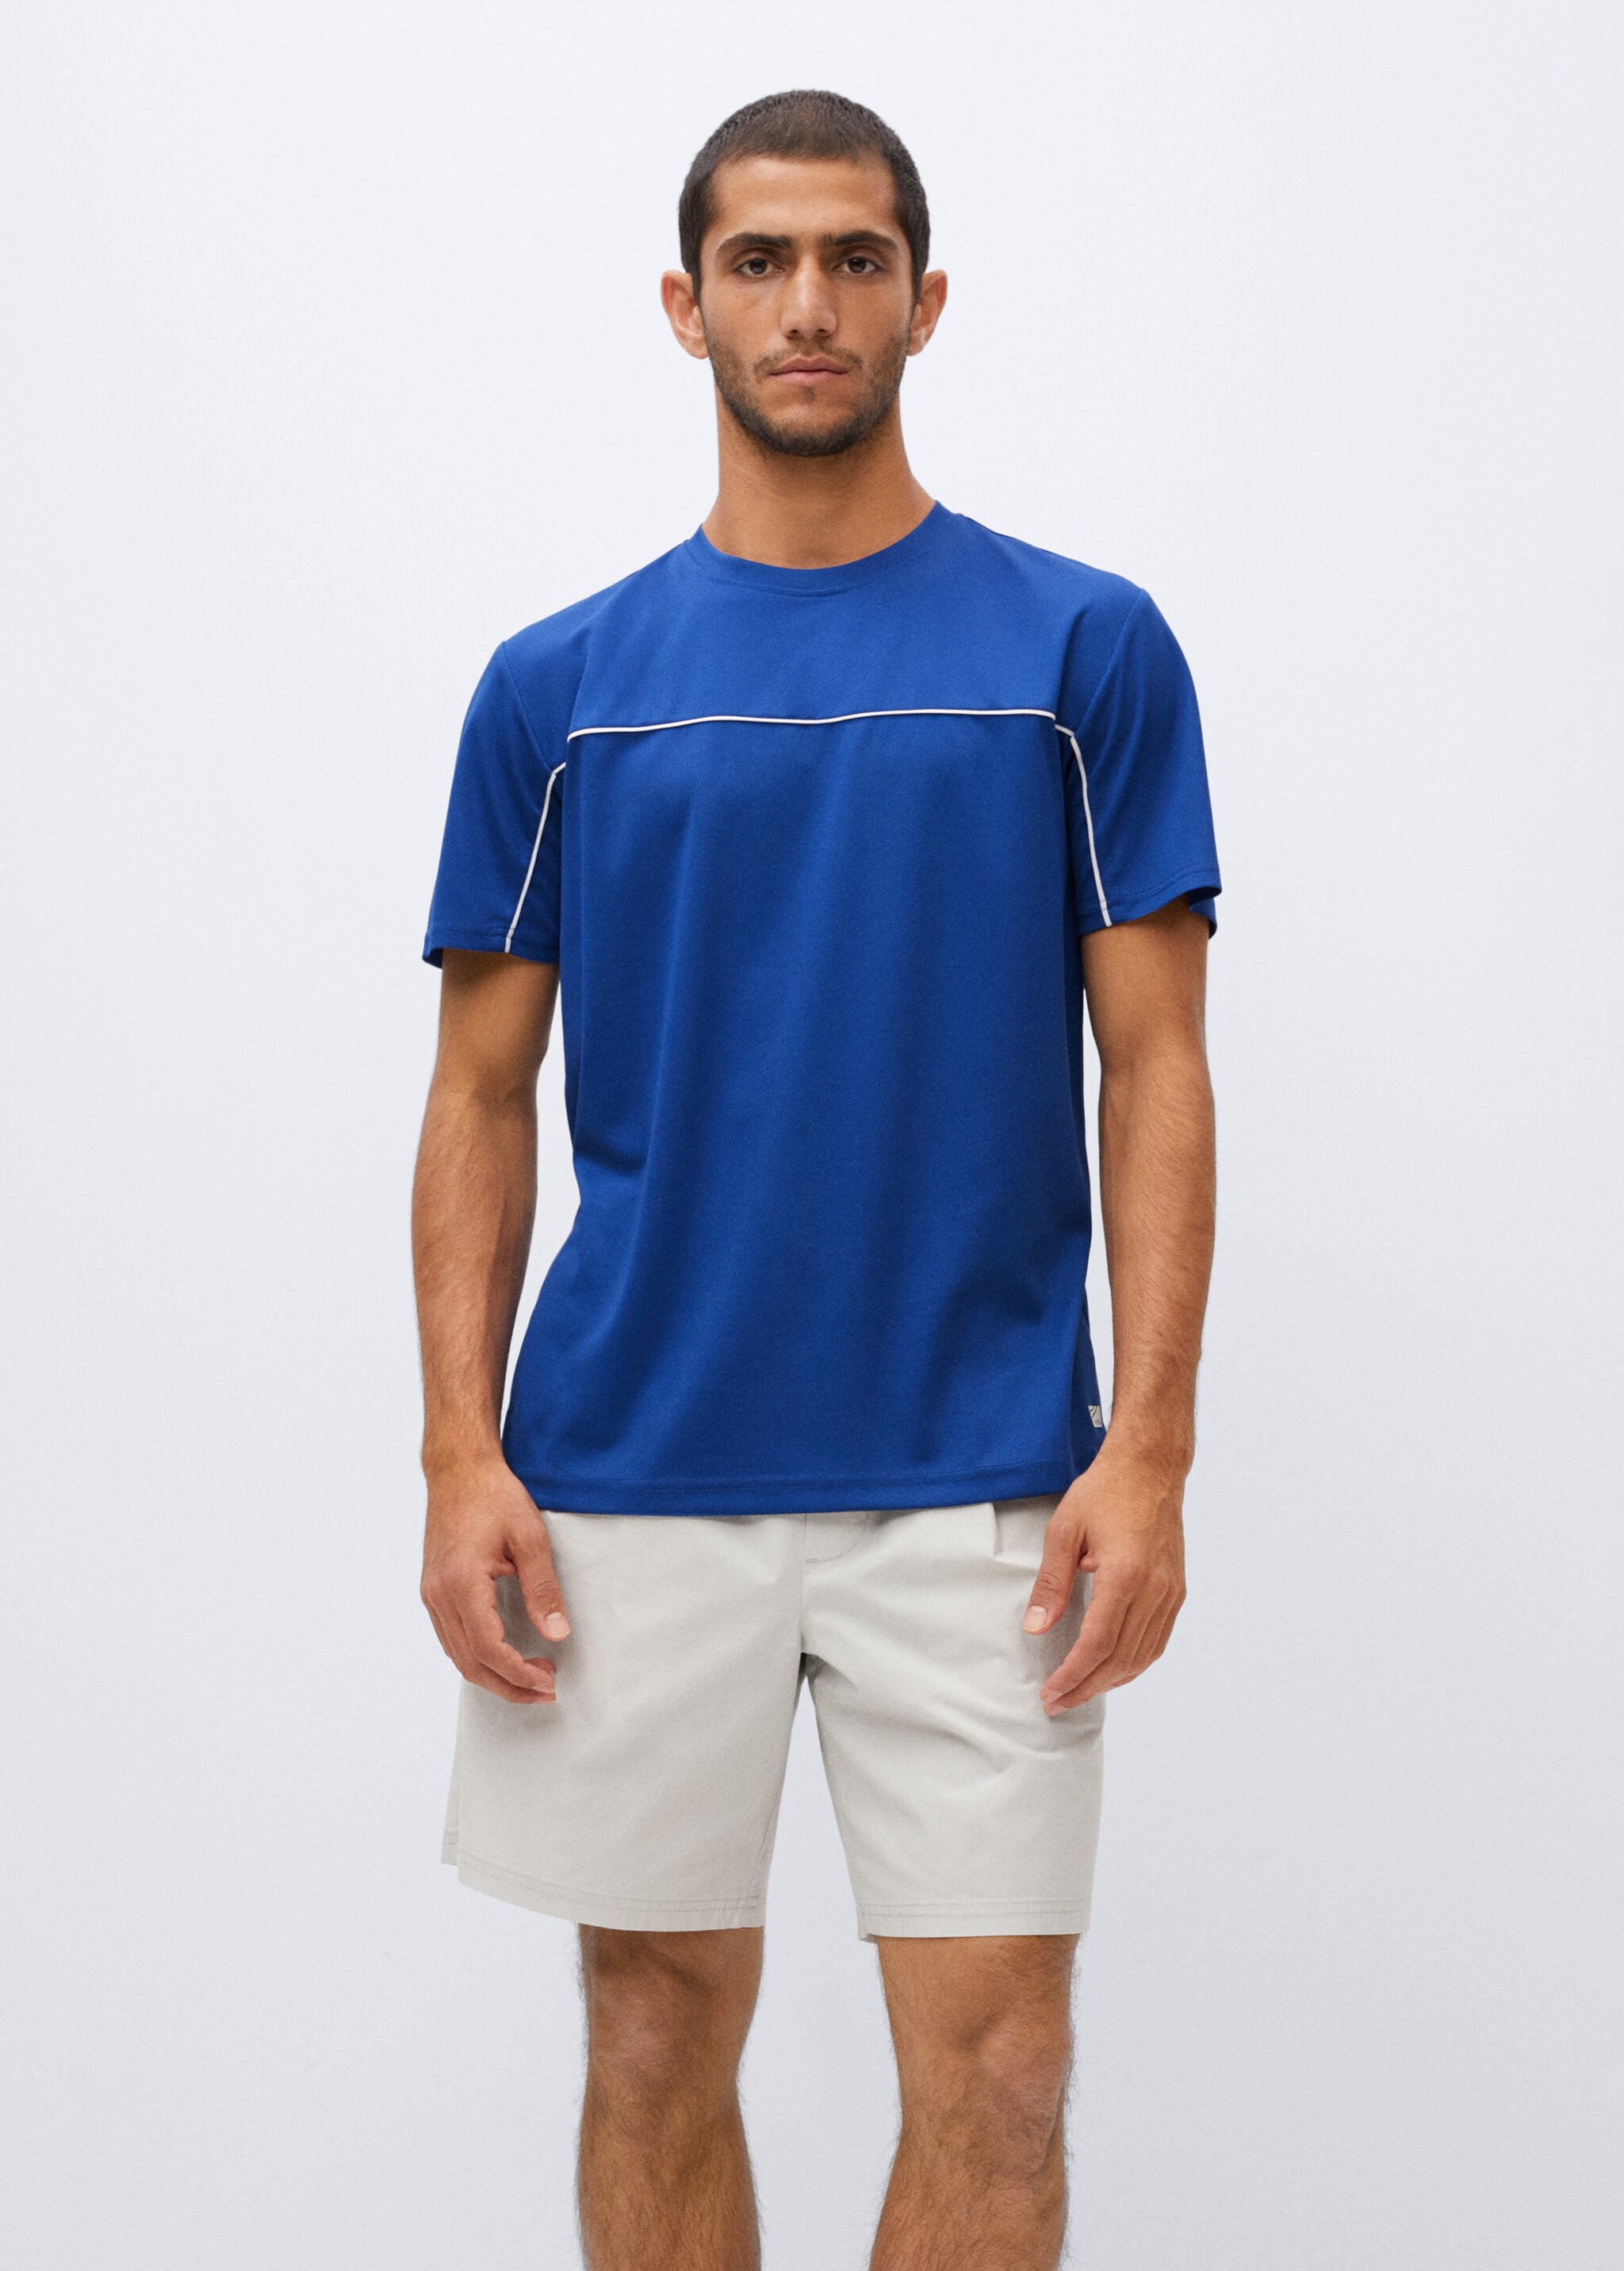 Camiseta deportiva transpirable - Plano medio